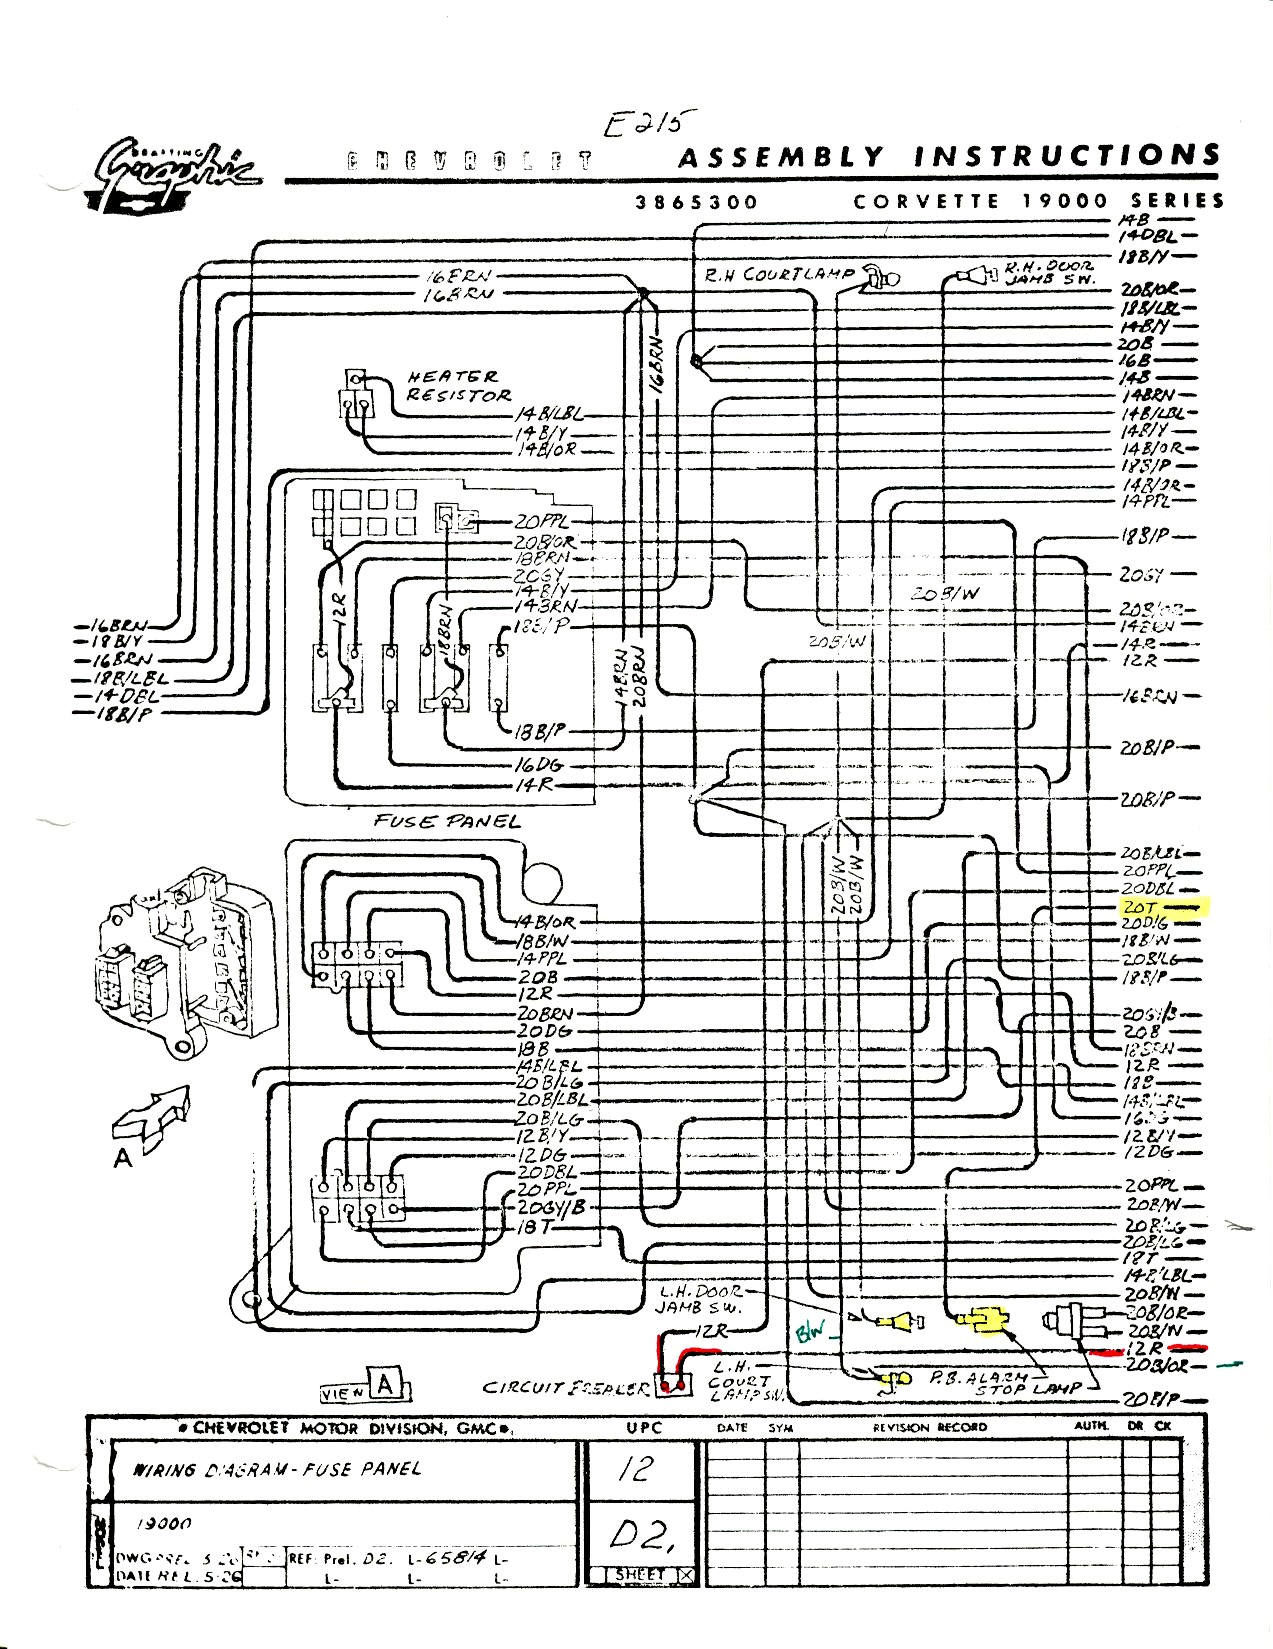 I need a 1965 wiring diagram - CorvetteForum - Chevrolet Corvette Forum